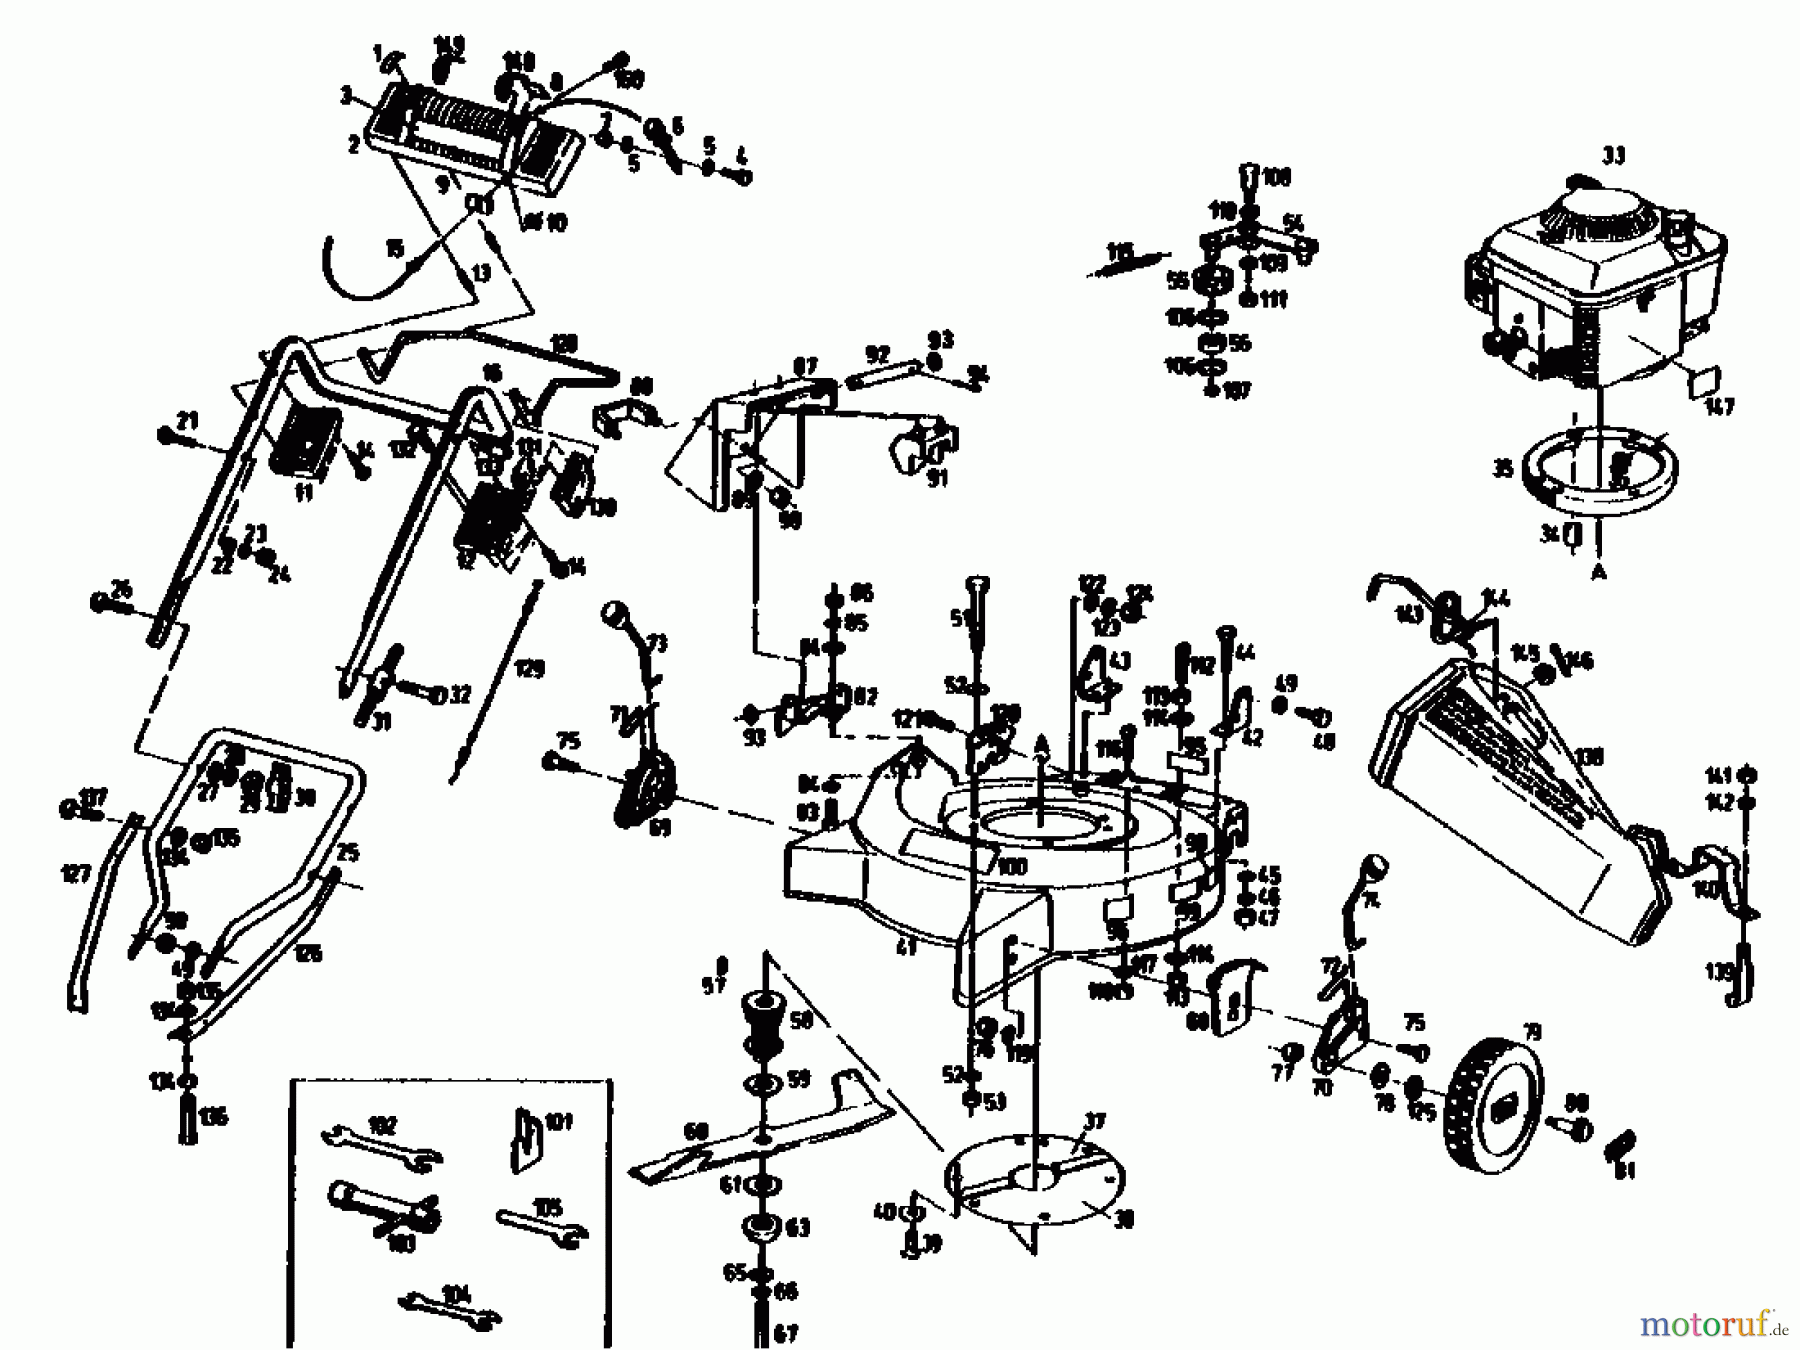  Gutbrod Motormäher mit Antrieb MS 482 R 04008.03  (1991) Grundgerät